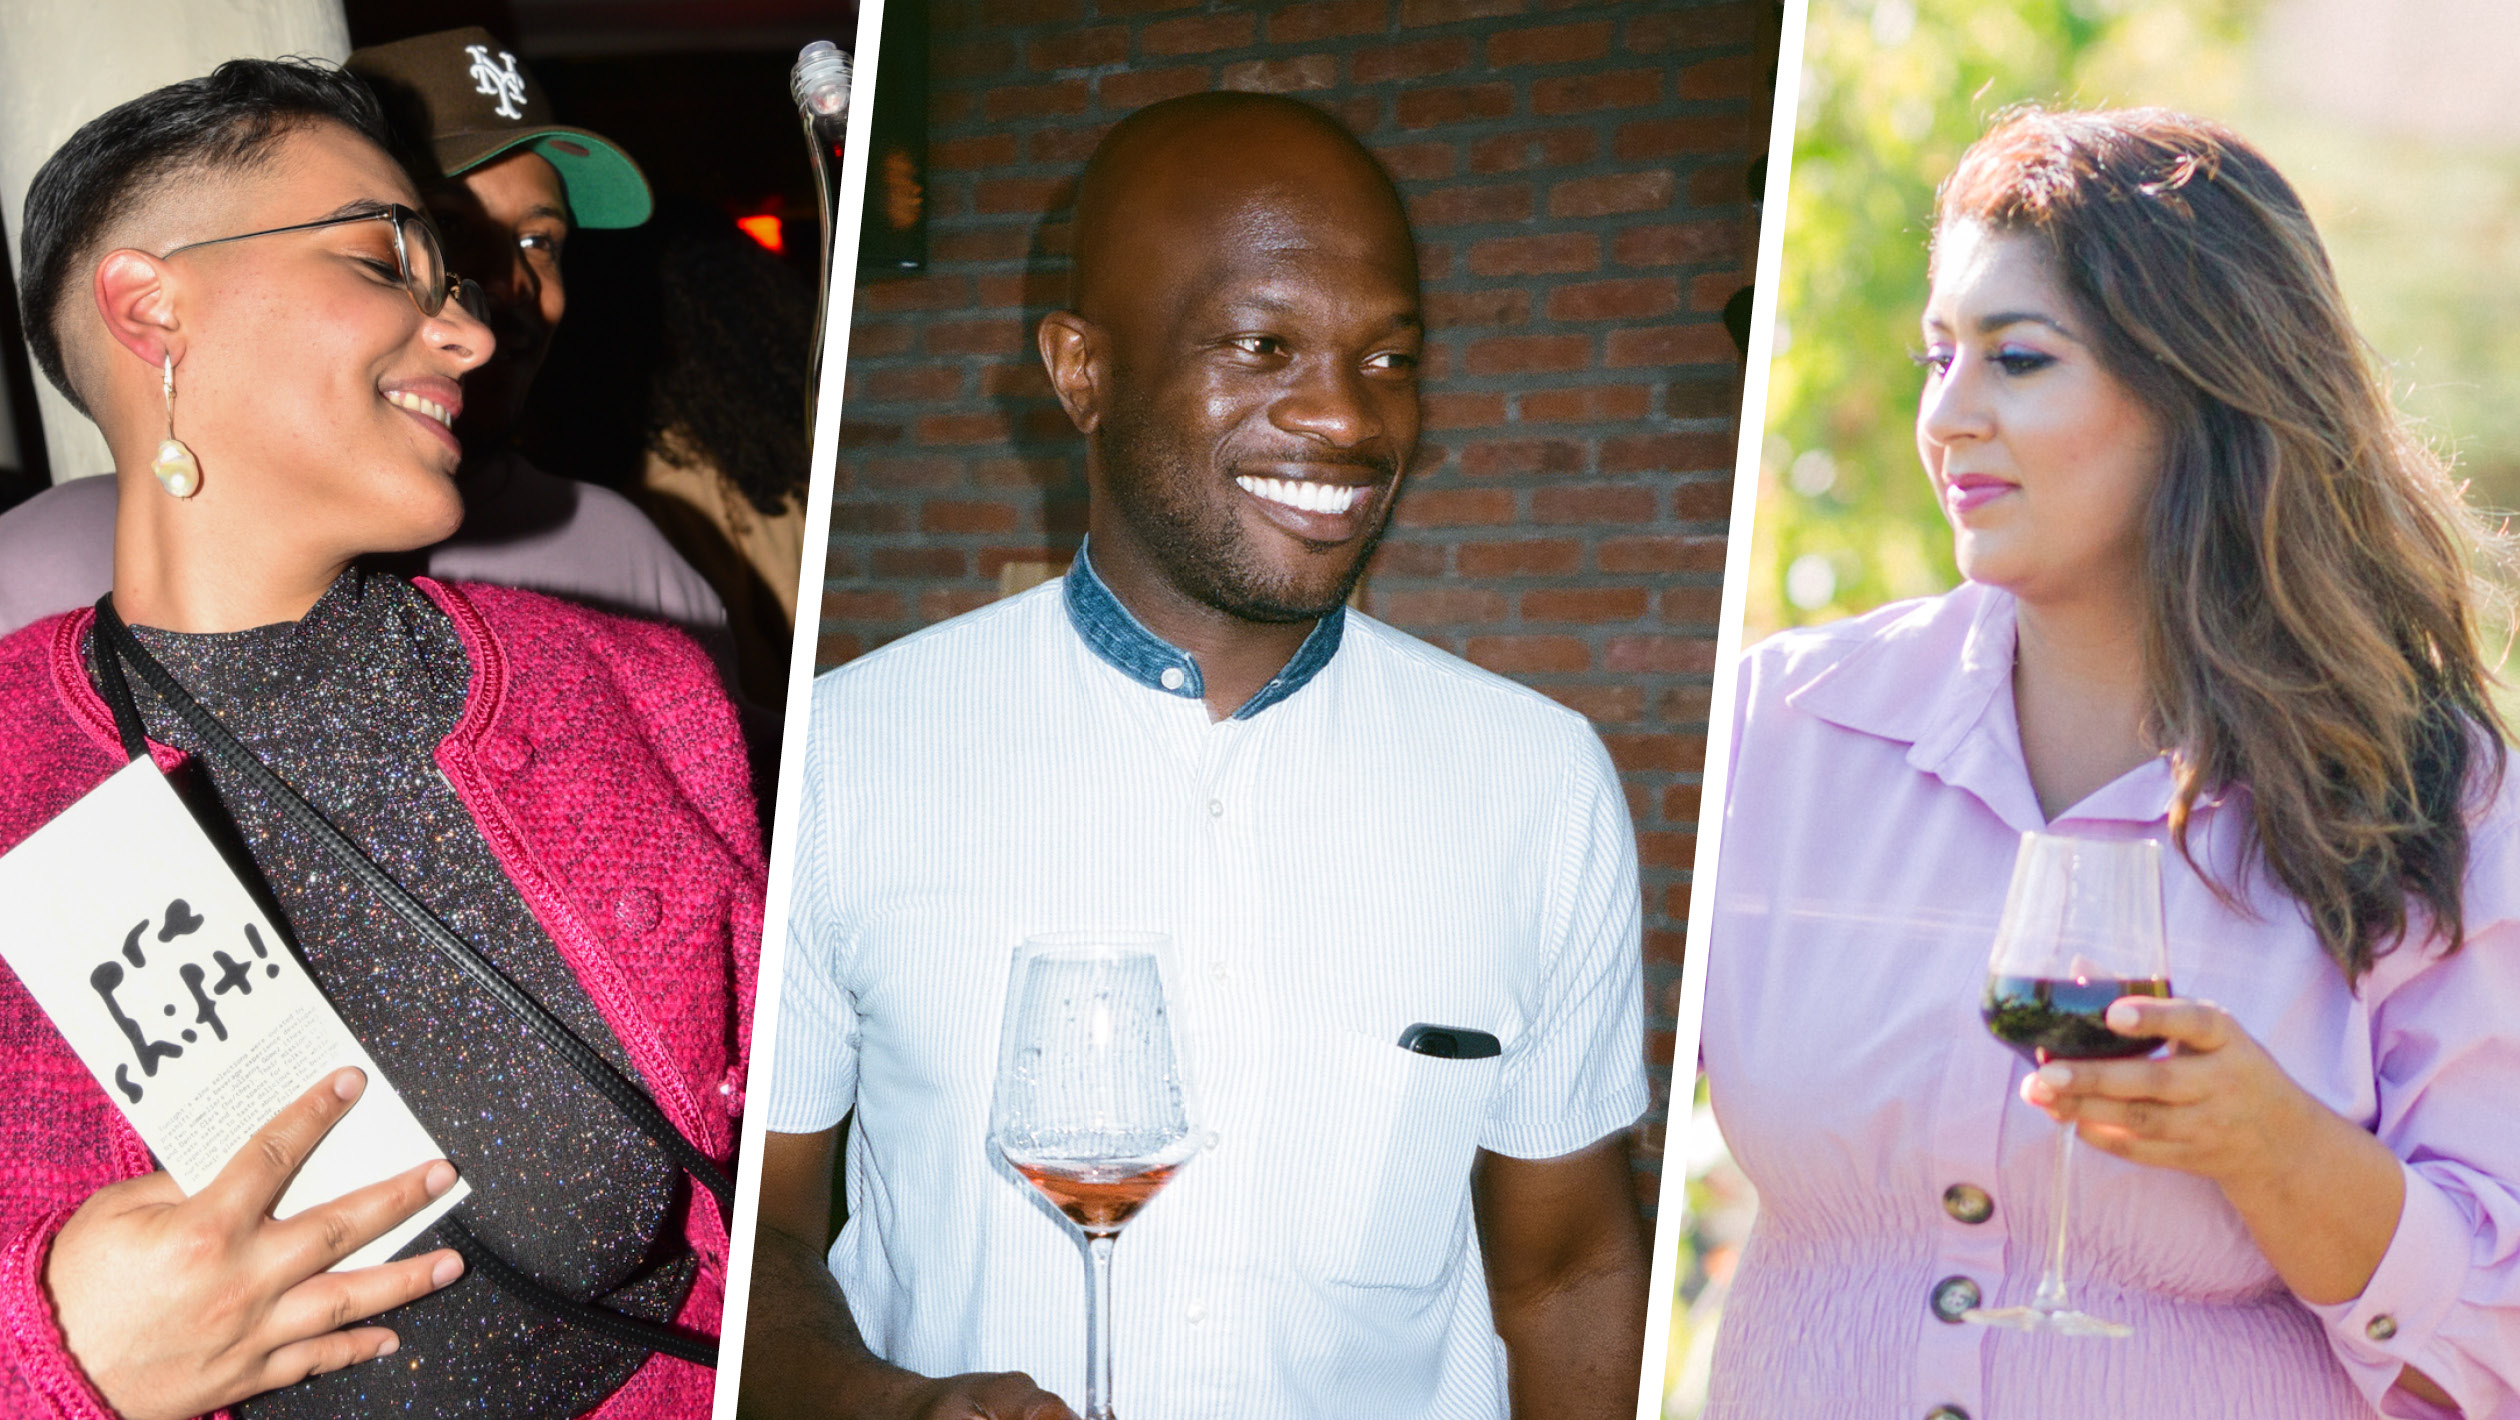 From left to right: Julianny Gomez, the cofounder of Preshift! (photo credit: Jonathan Johnson); Onyeka Obiocha, the founder of Palm Wine (photo courtesy of Onyeka Obiocha); Rahgni Naidu, the founder of Naidu Wines (photo credit: Cheri Tran).